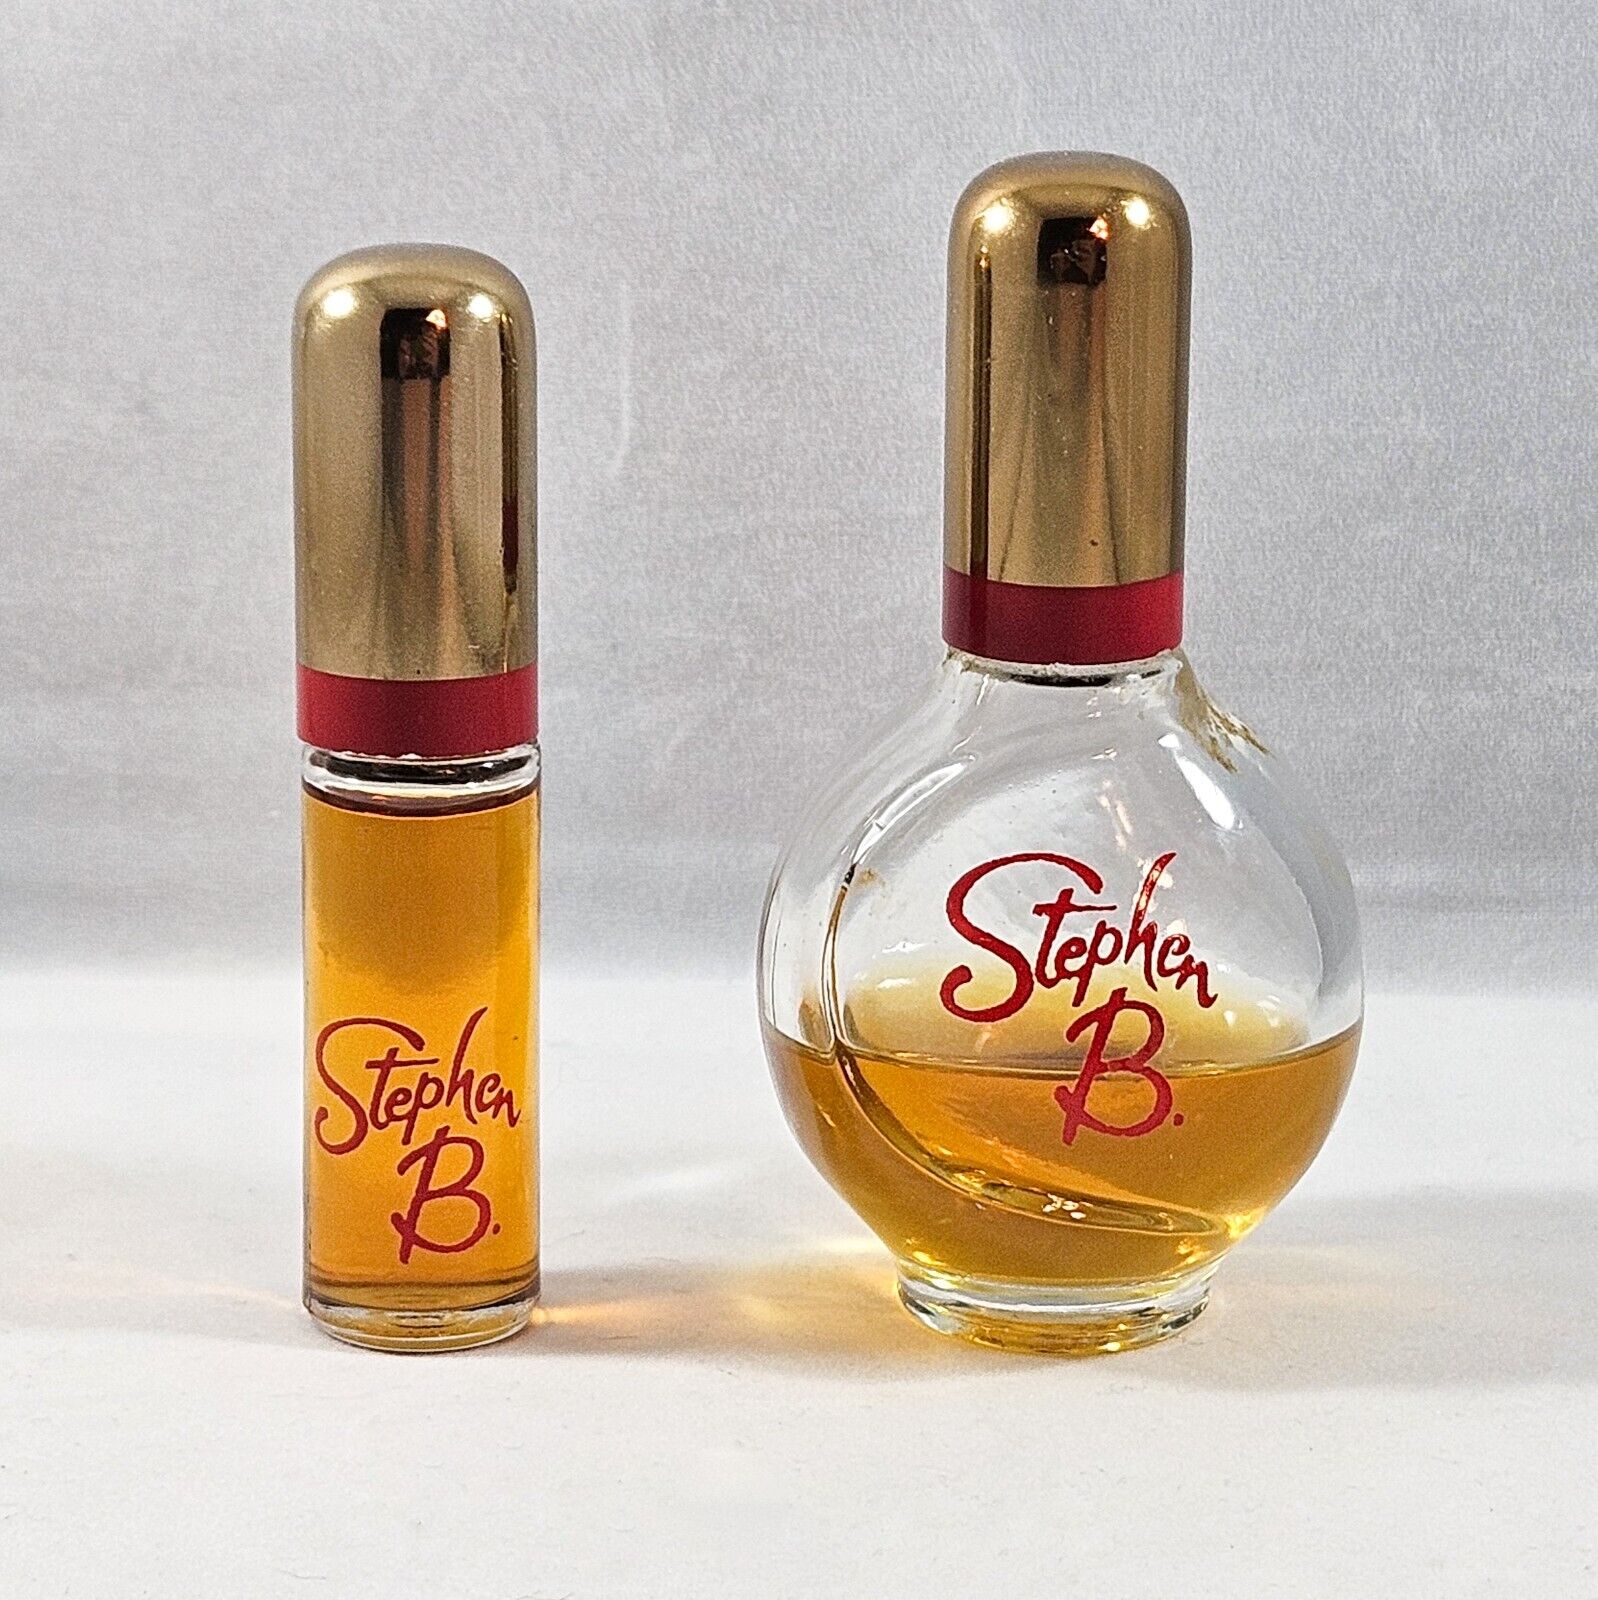 Lot 2 Vintage Stephen B Burrows Cologne Perfume Fragrances 1 oz 1/4 oz Bottles